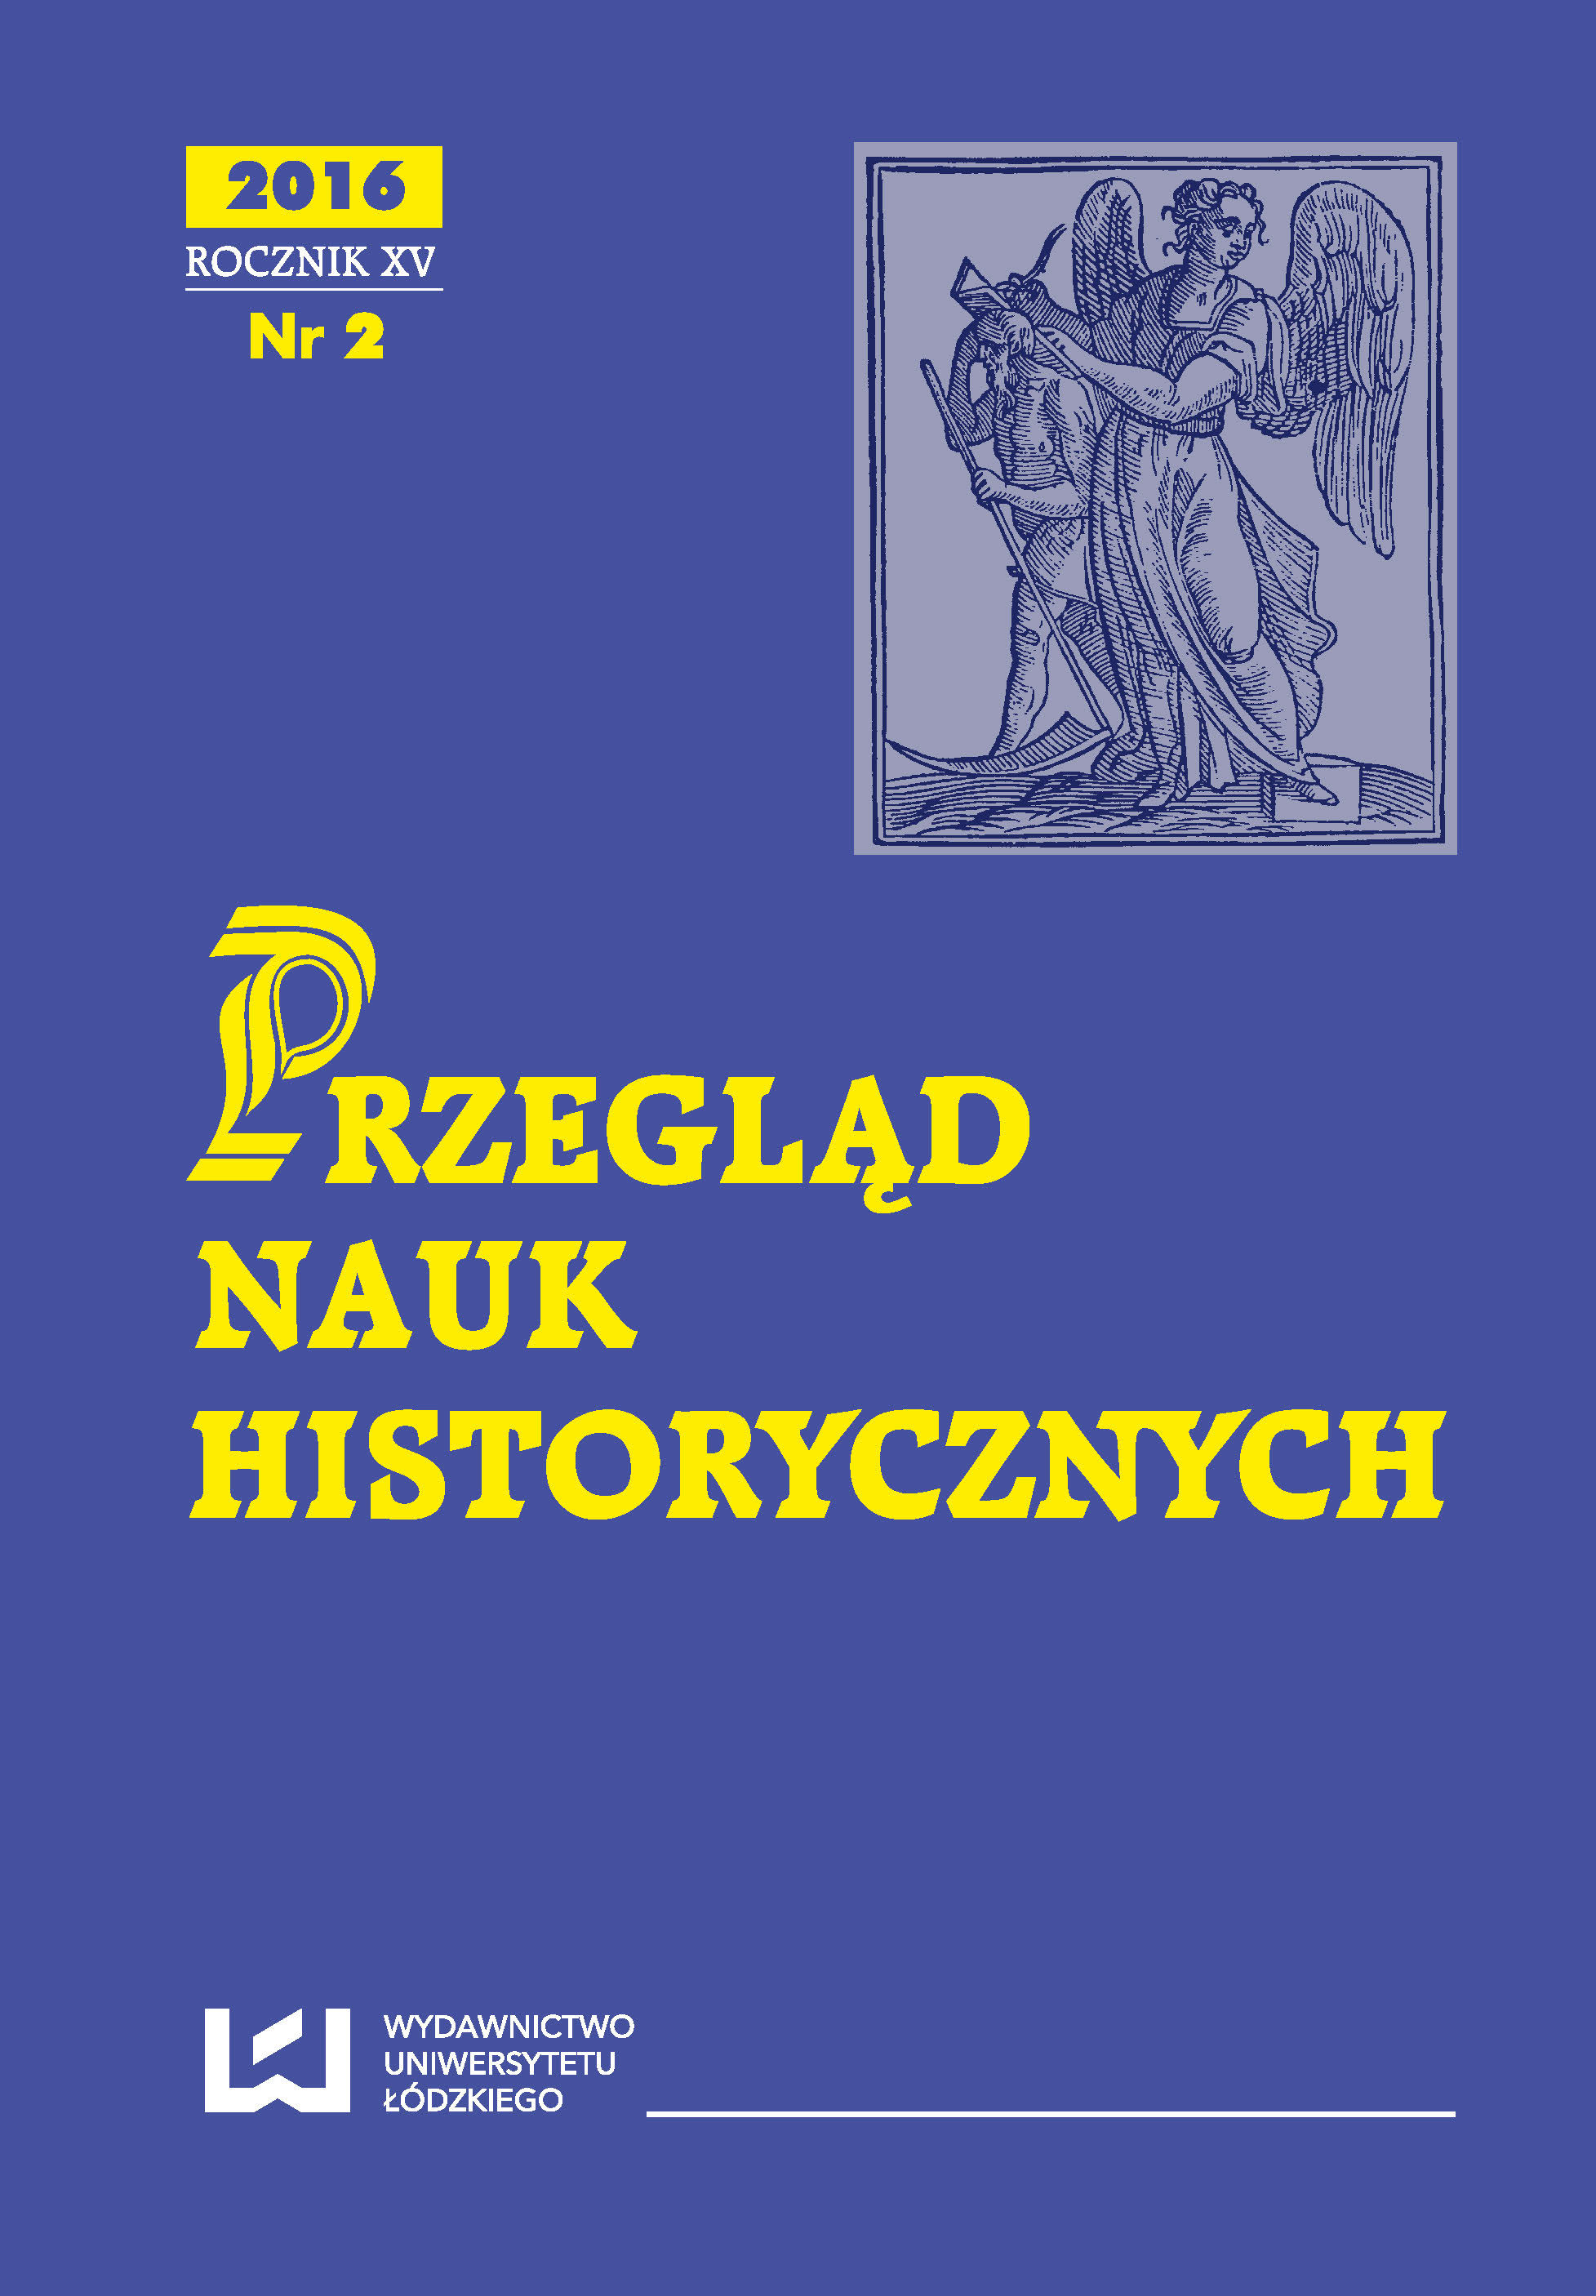 Around the historical writing of Roman Wysocki Cover Image